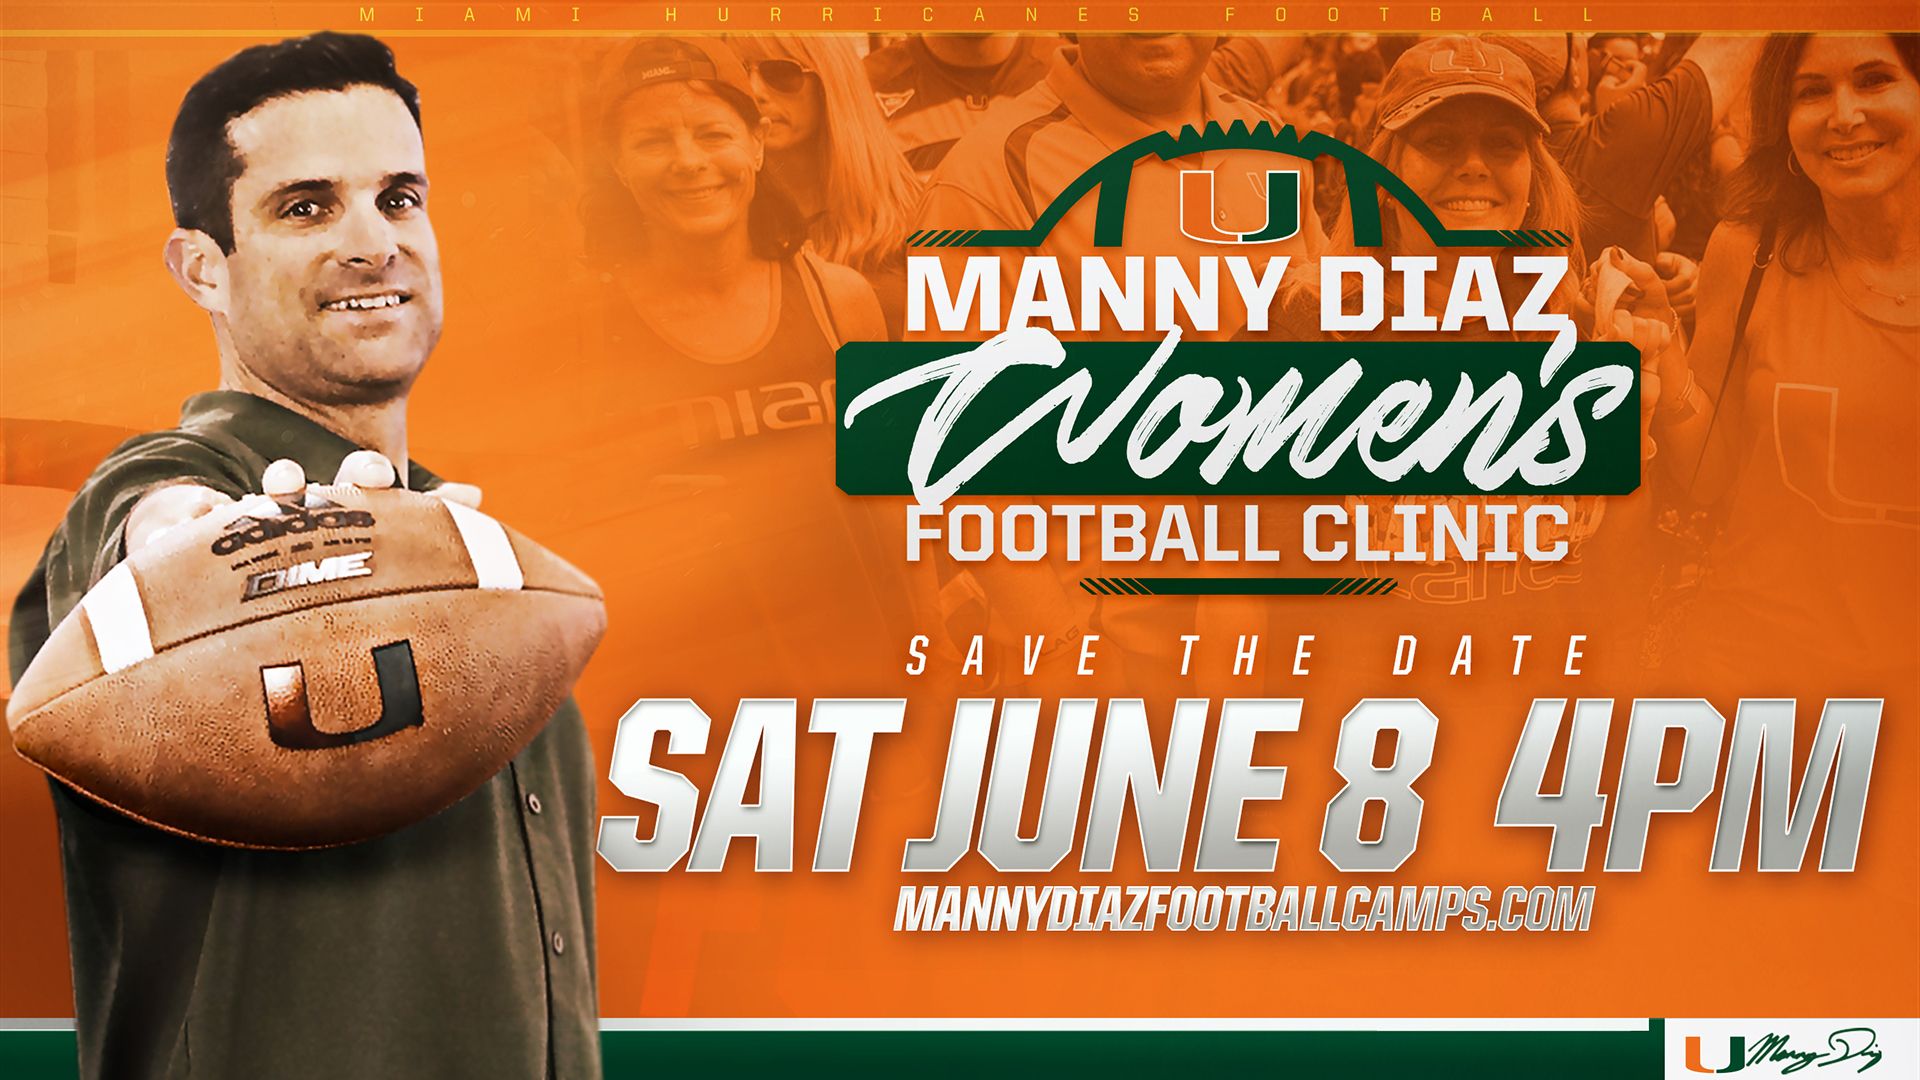 Manny Diaz Women's Football Clinic Set for June 8